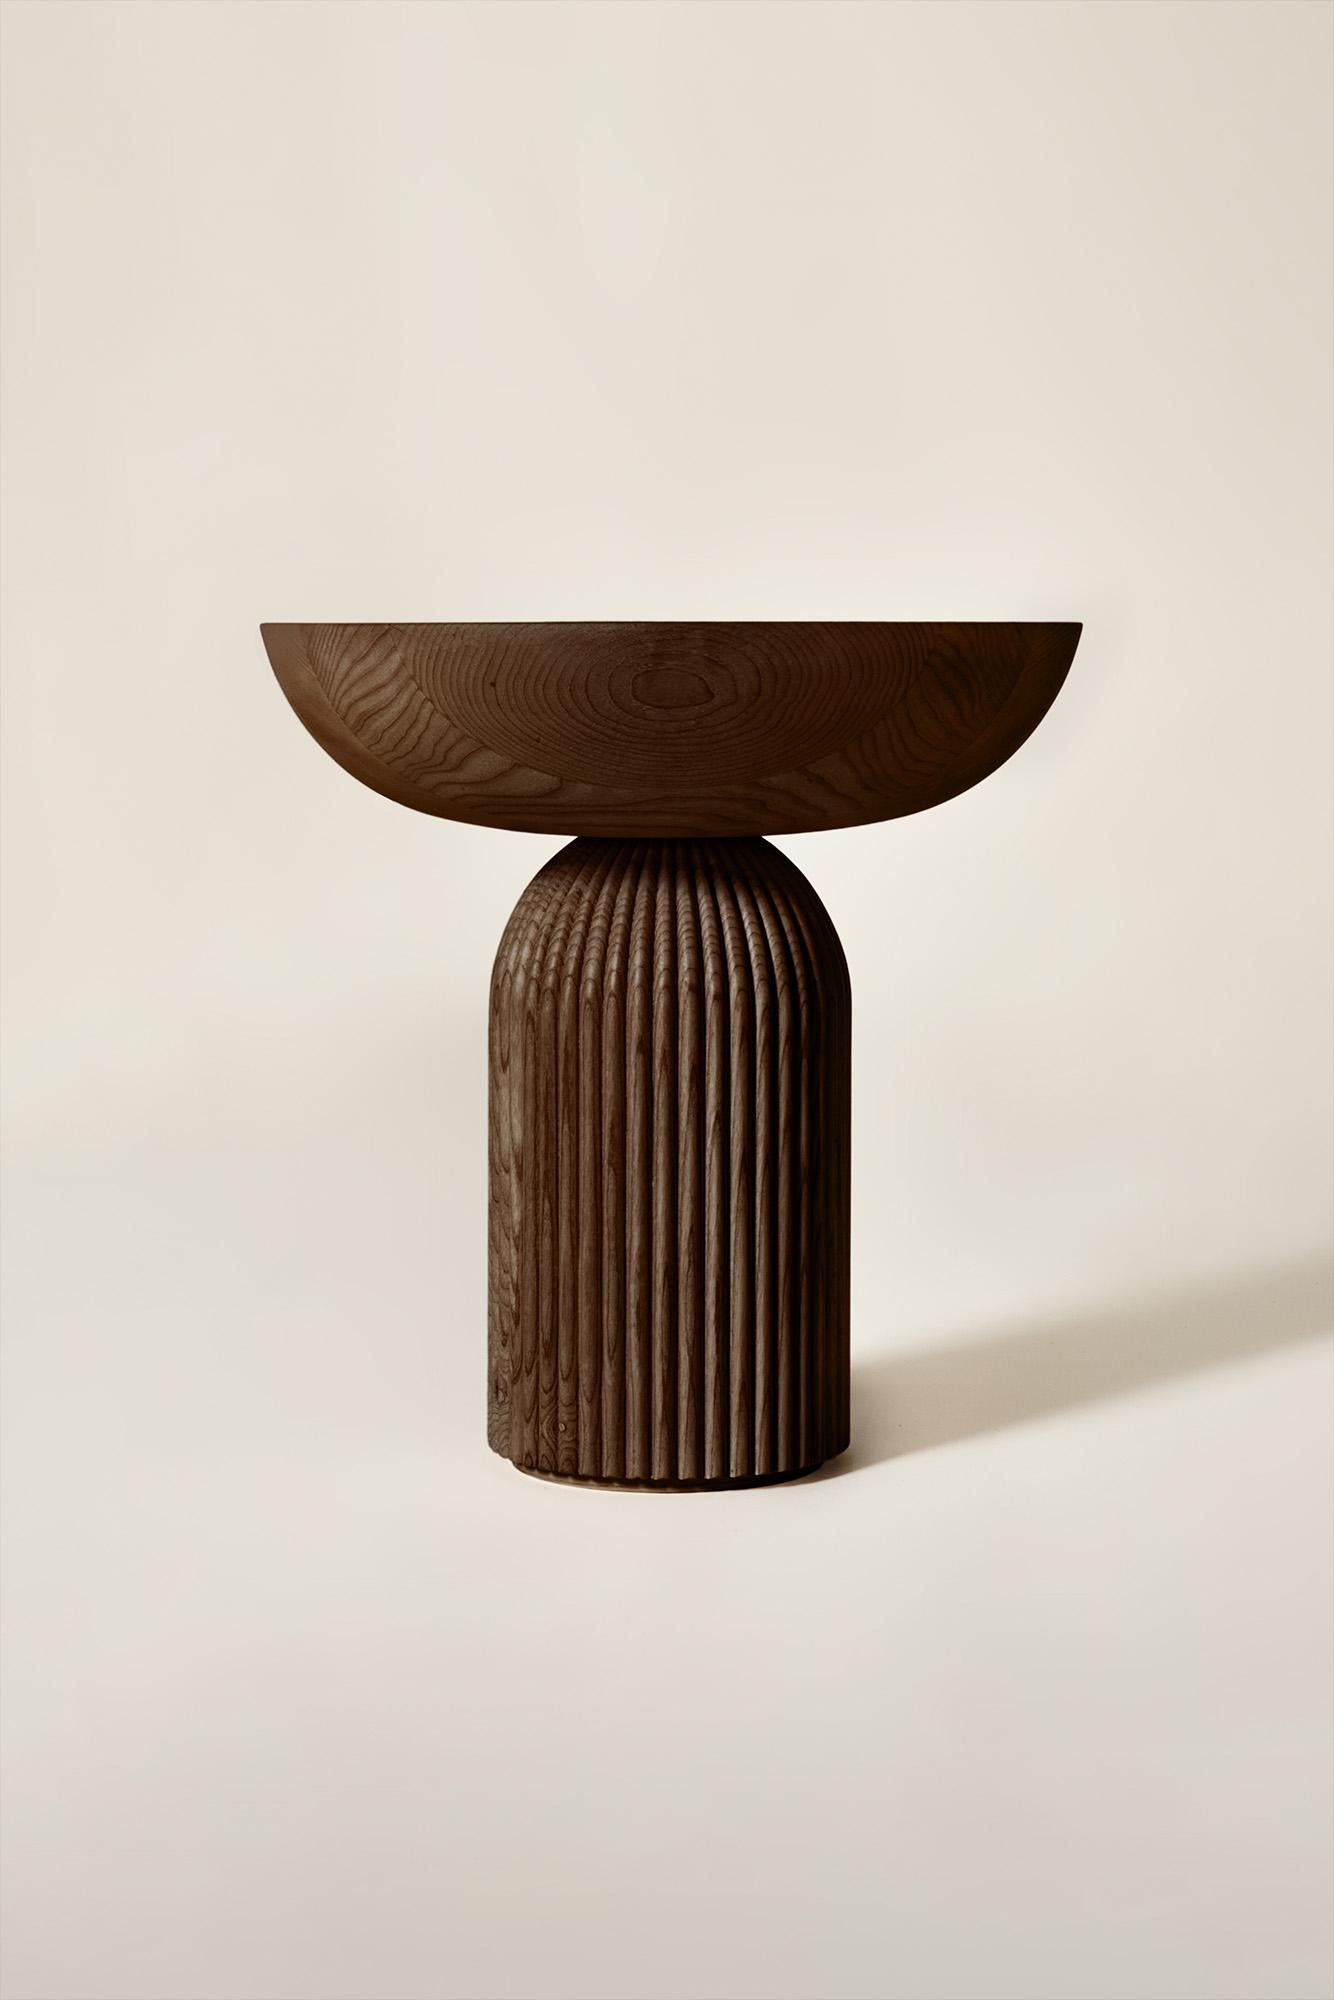 Convesso Solid Wood Coffee Table, Ash in Natural Finish, Contemporary In New Condition For Sale In Cadeglioppi de Oppeano, VR